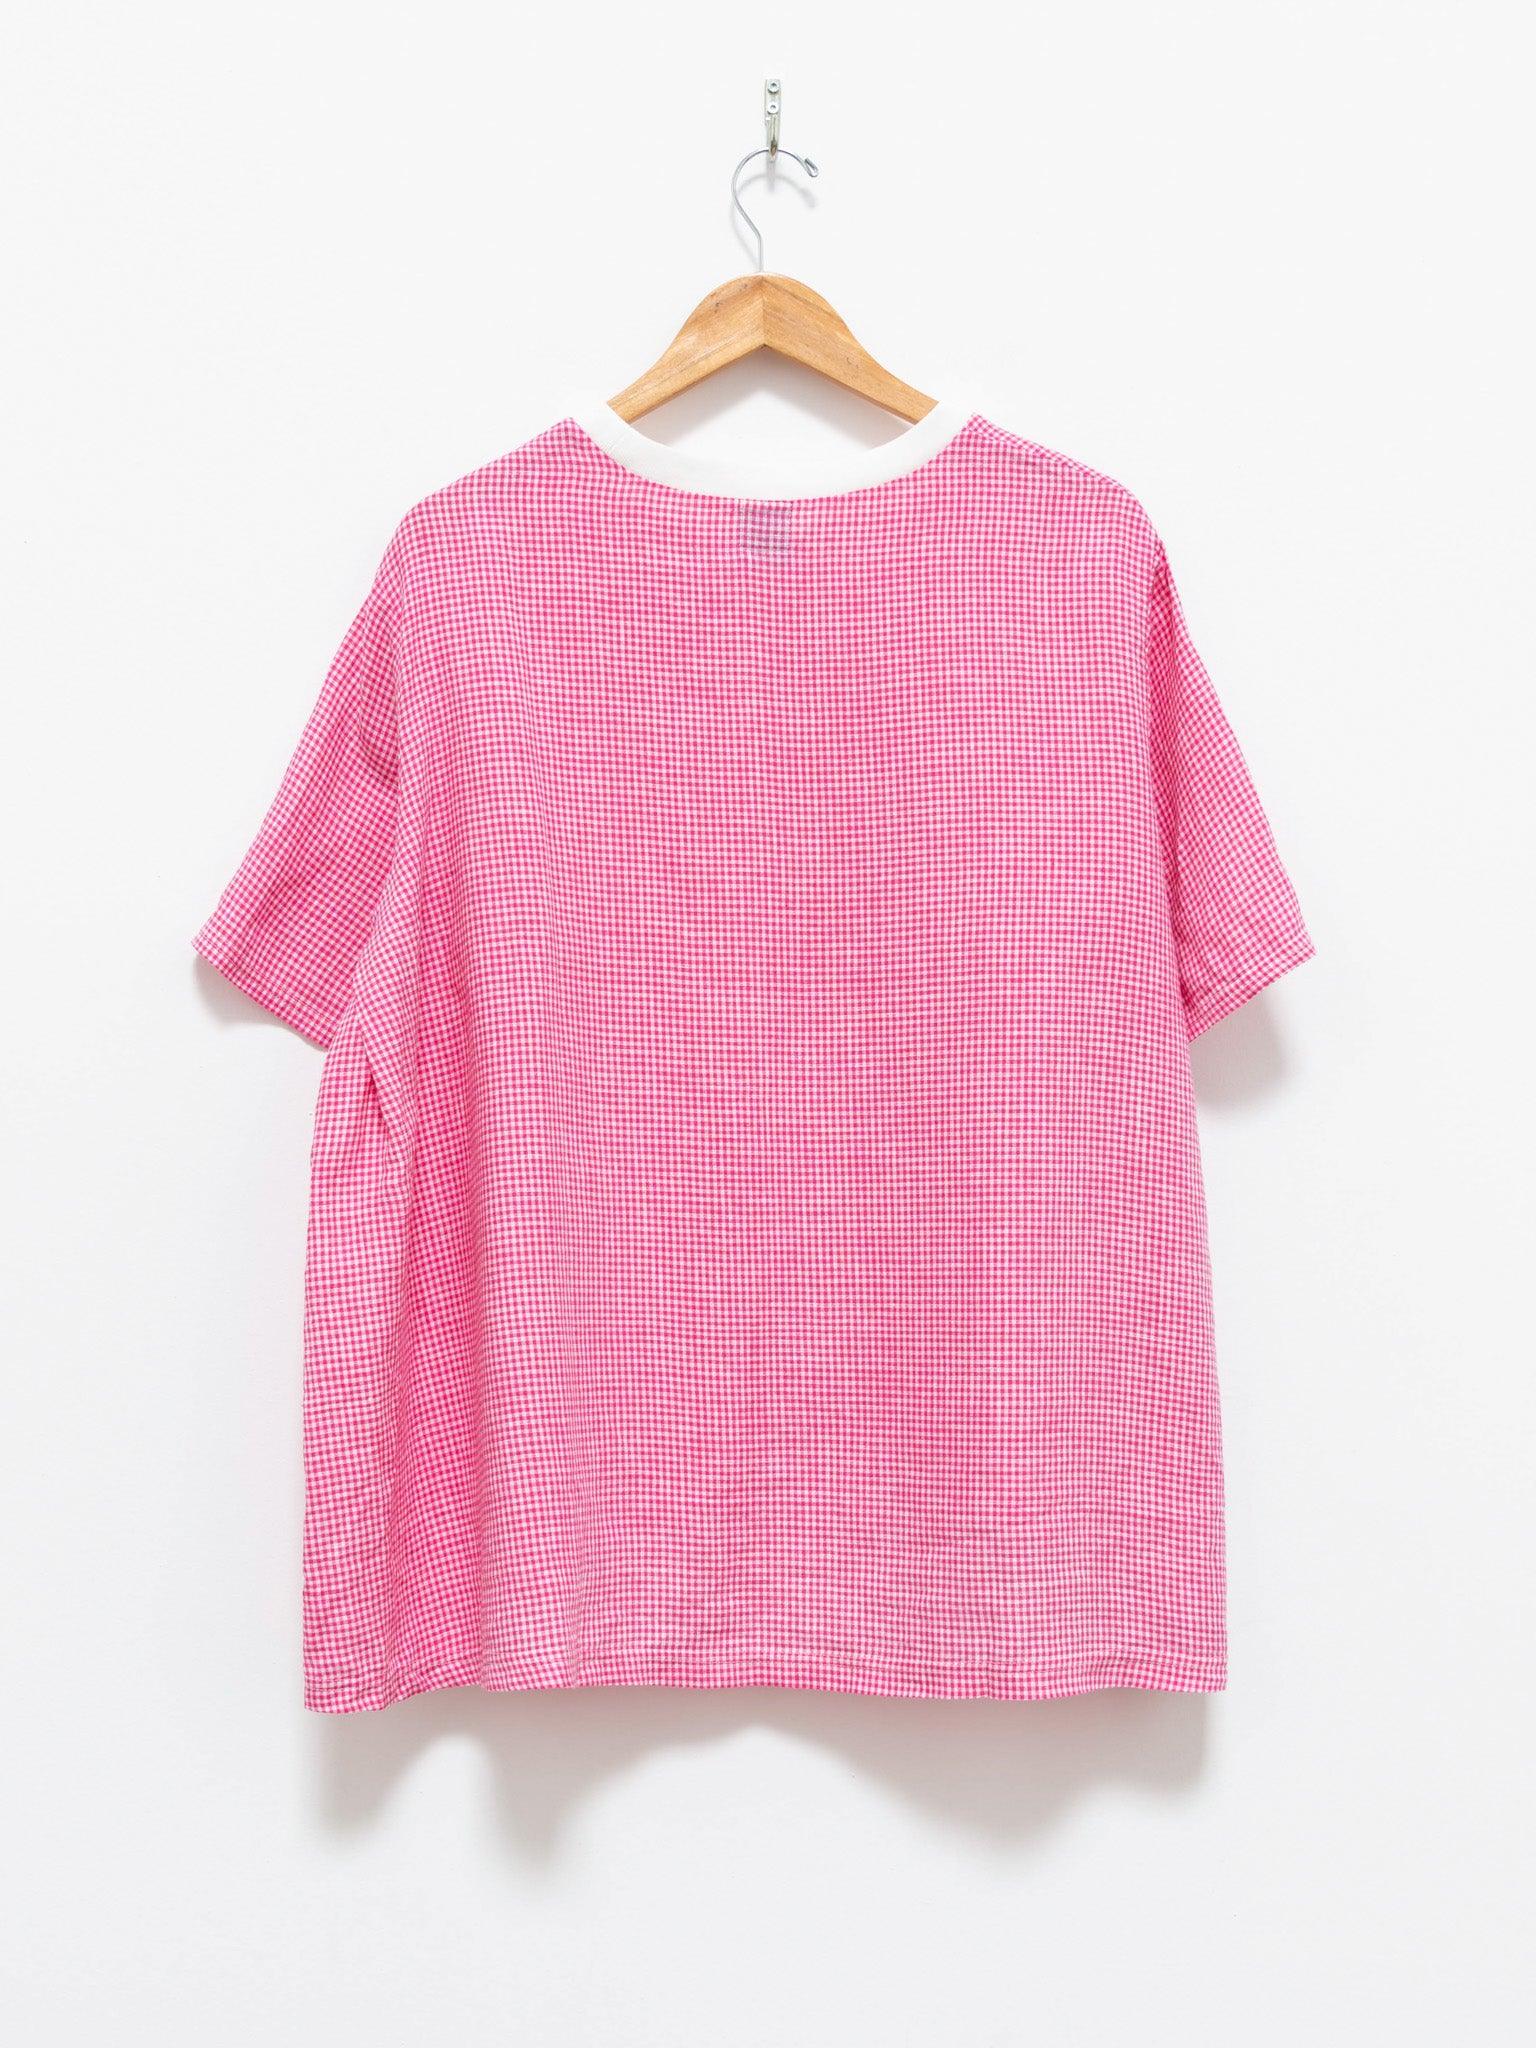 Namu Shop - Maillot Linen Flare Top - Pink Check